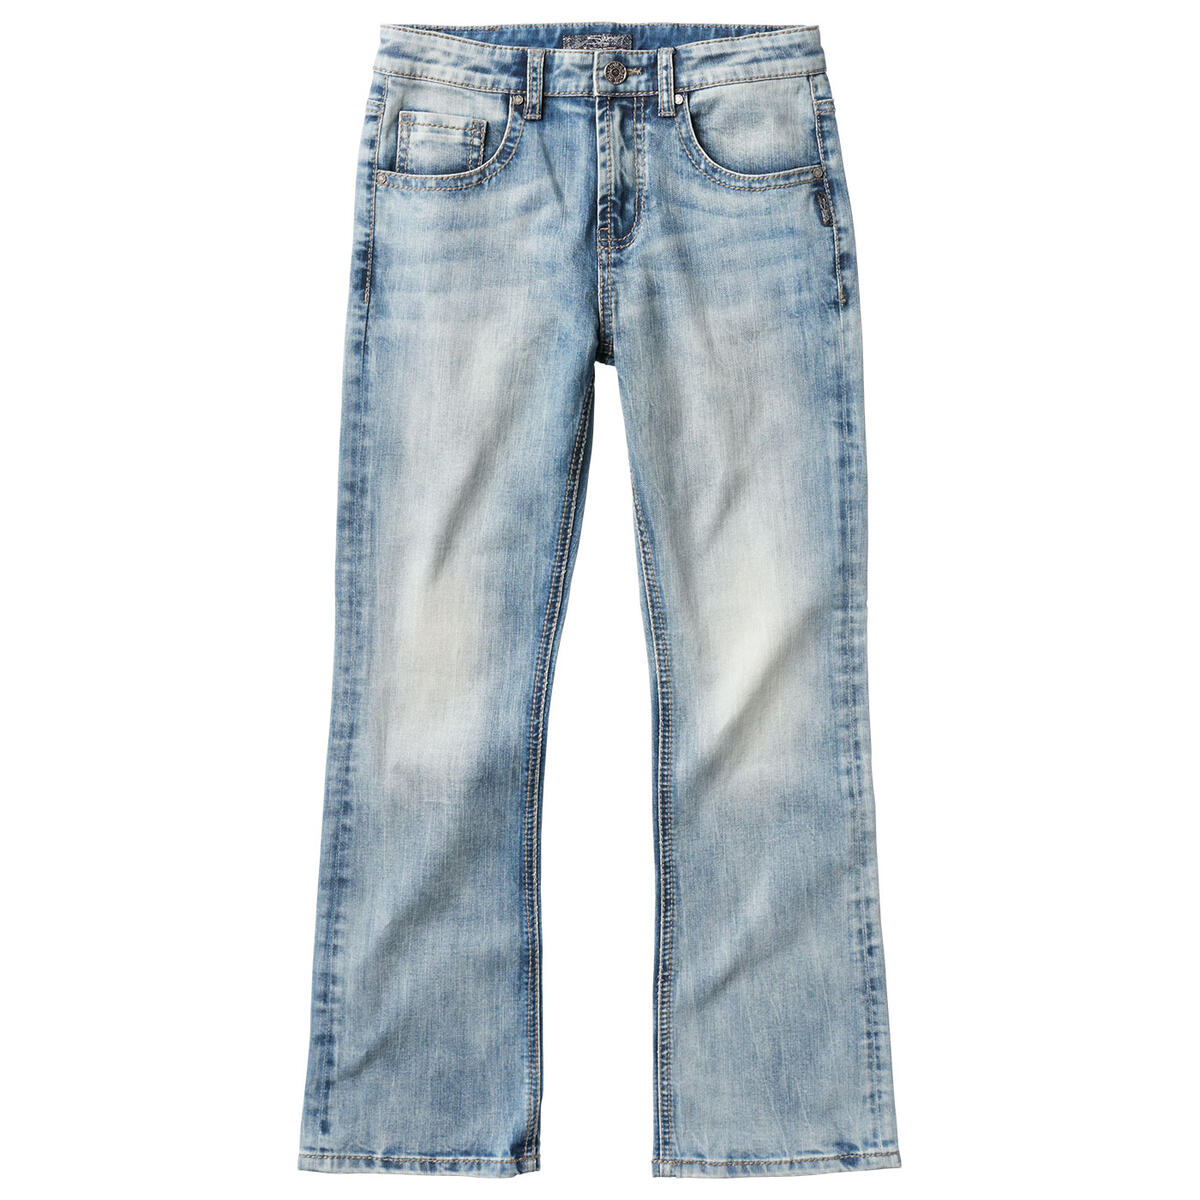 Zane Bootcut Jeans in Medium Wash (4-7), , hi-res image number 0